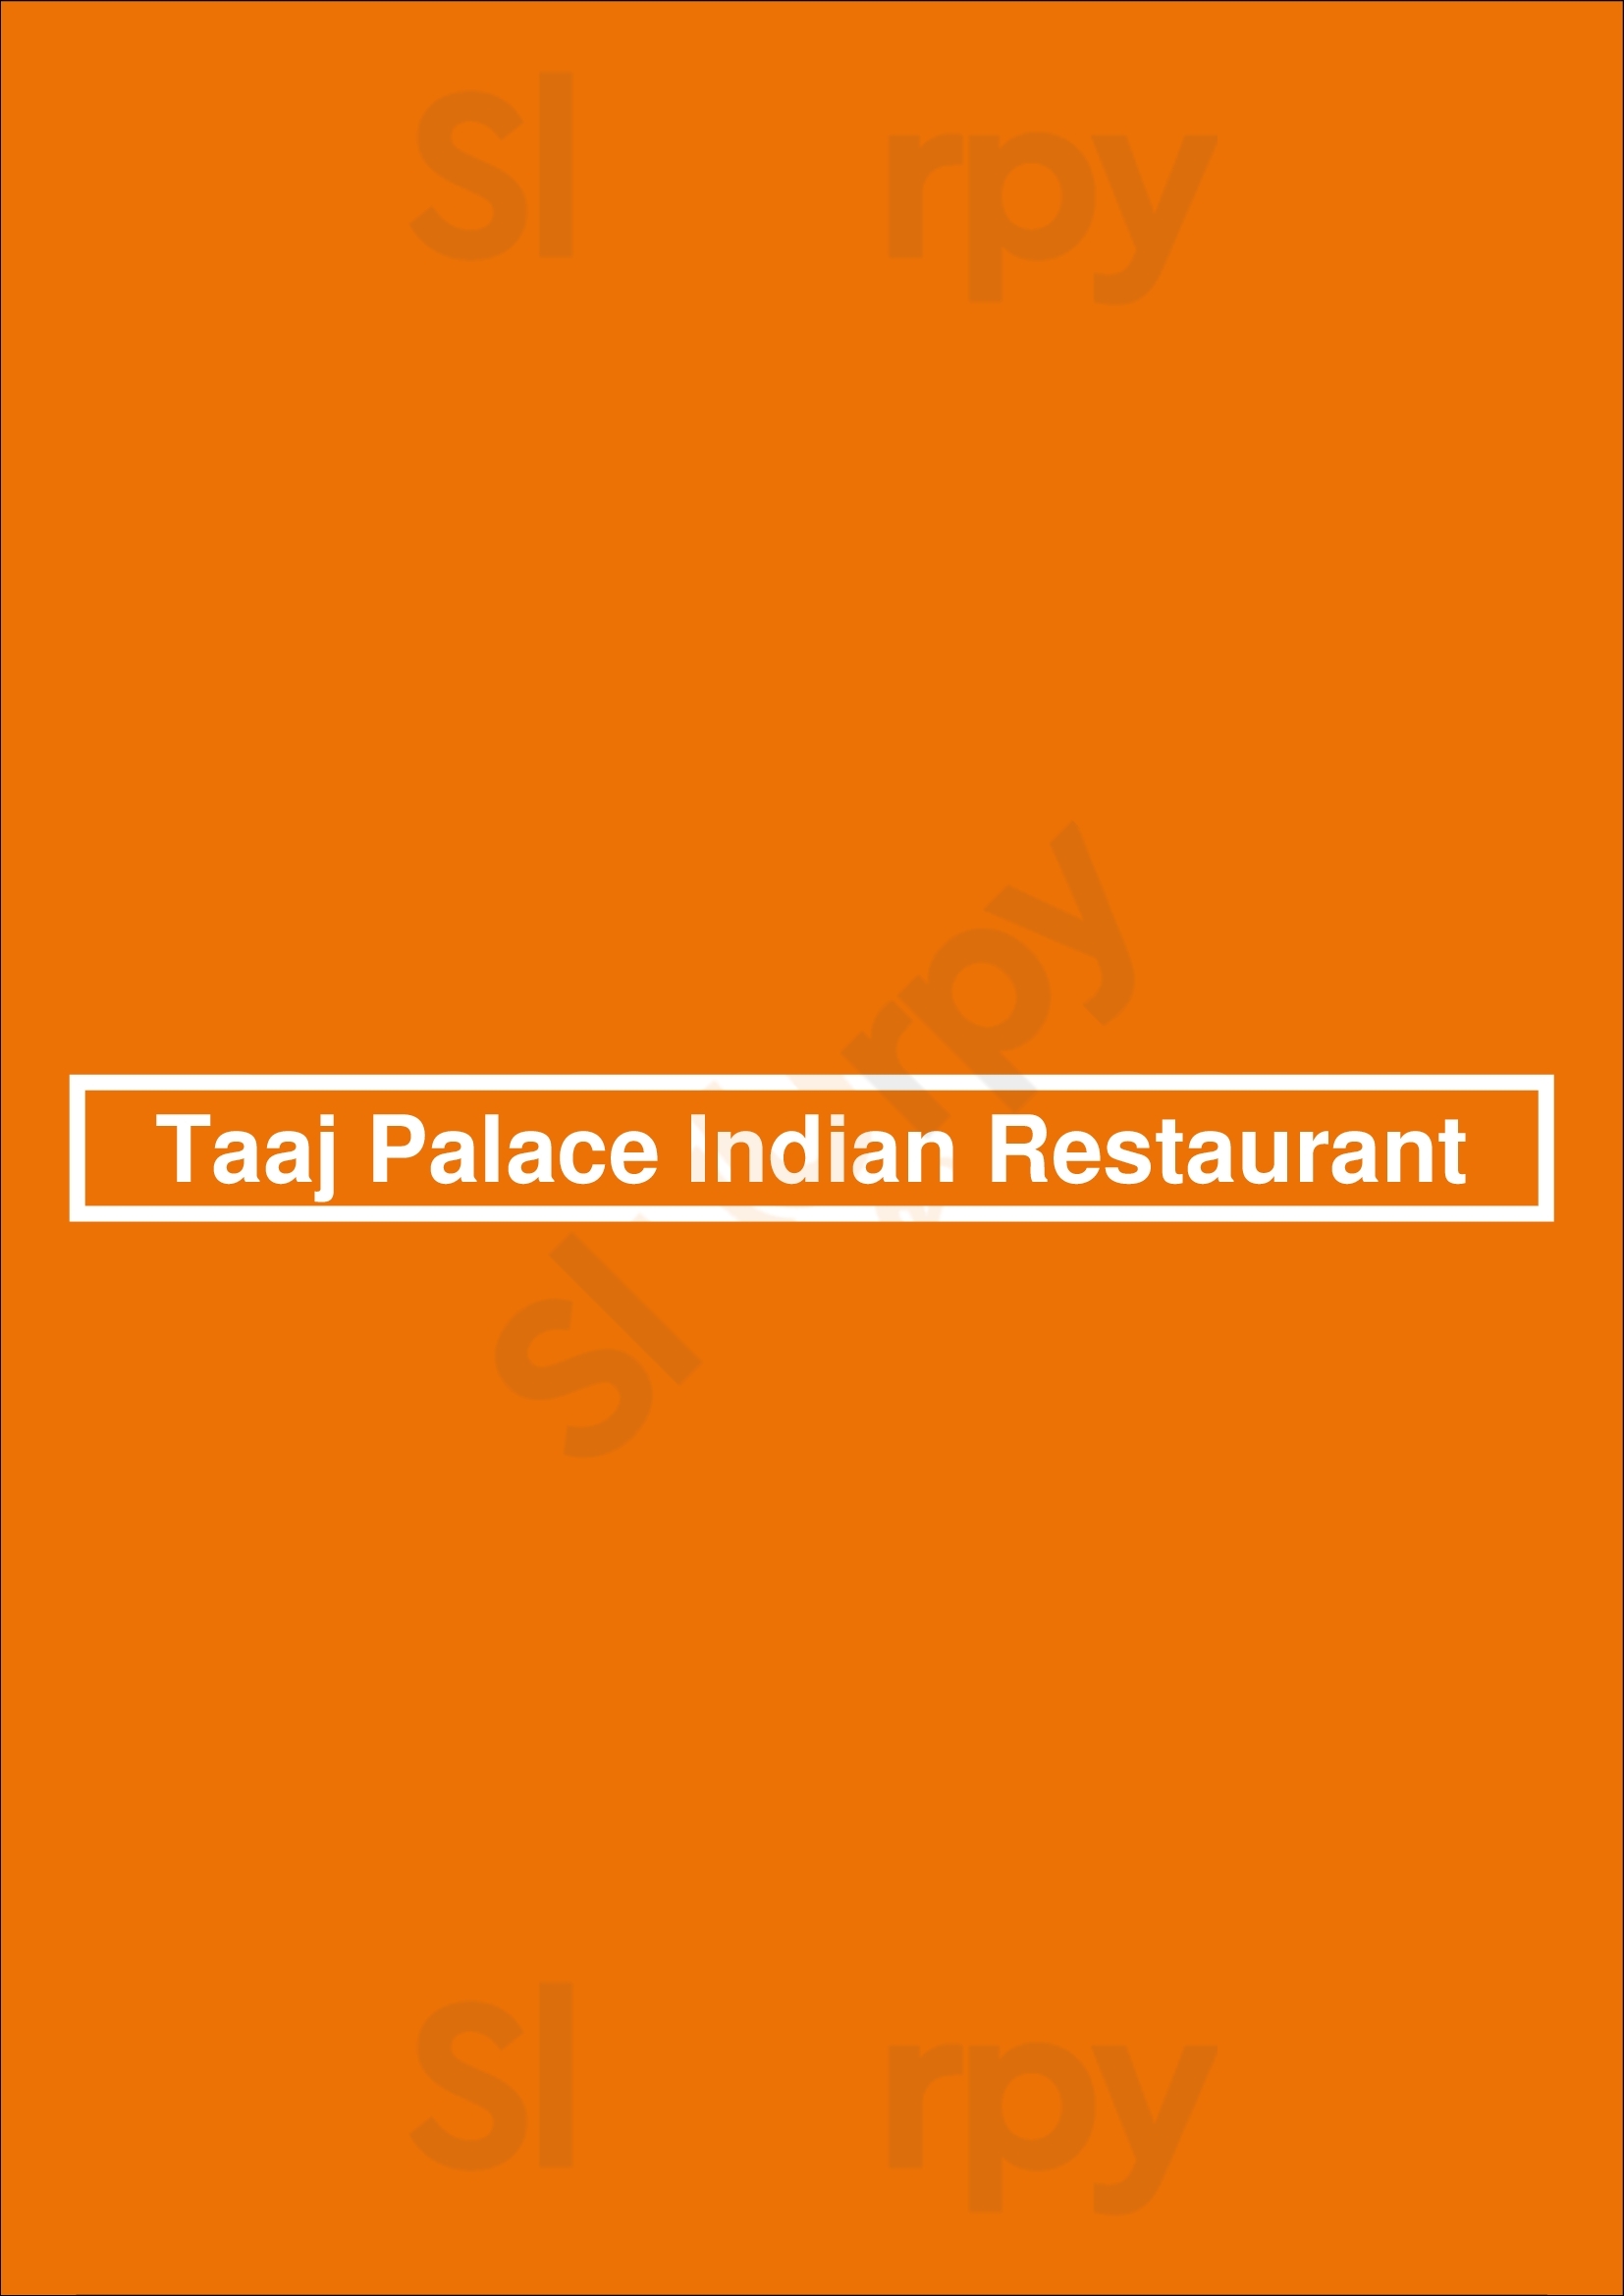 Taaj Palace Indian Restaurant Albuquerque Menu - 1